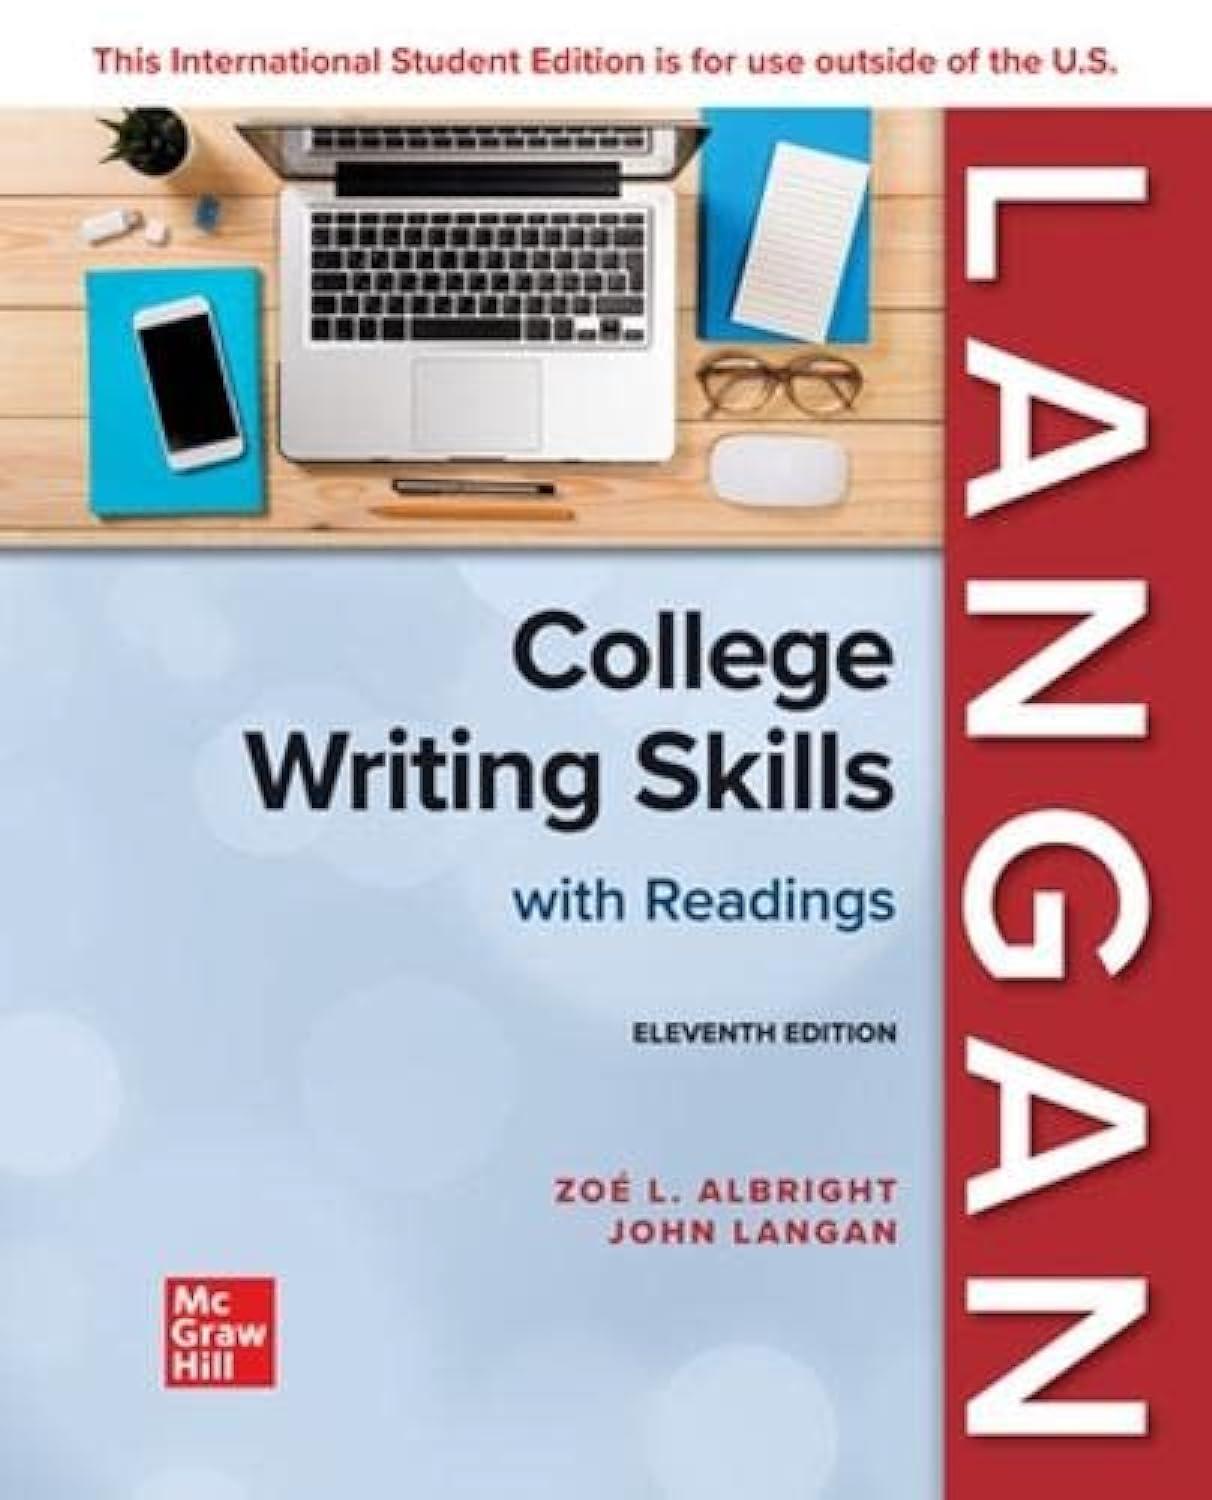 ise college writing skills with readings 11th international edition zoe l. albright, john langan 1265226598,